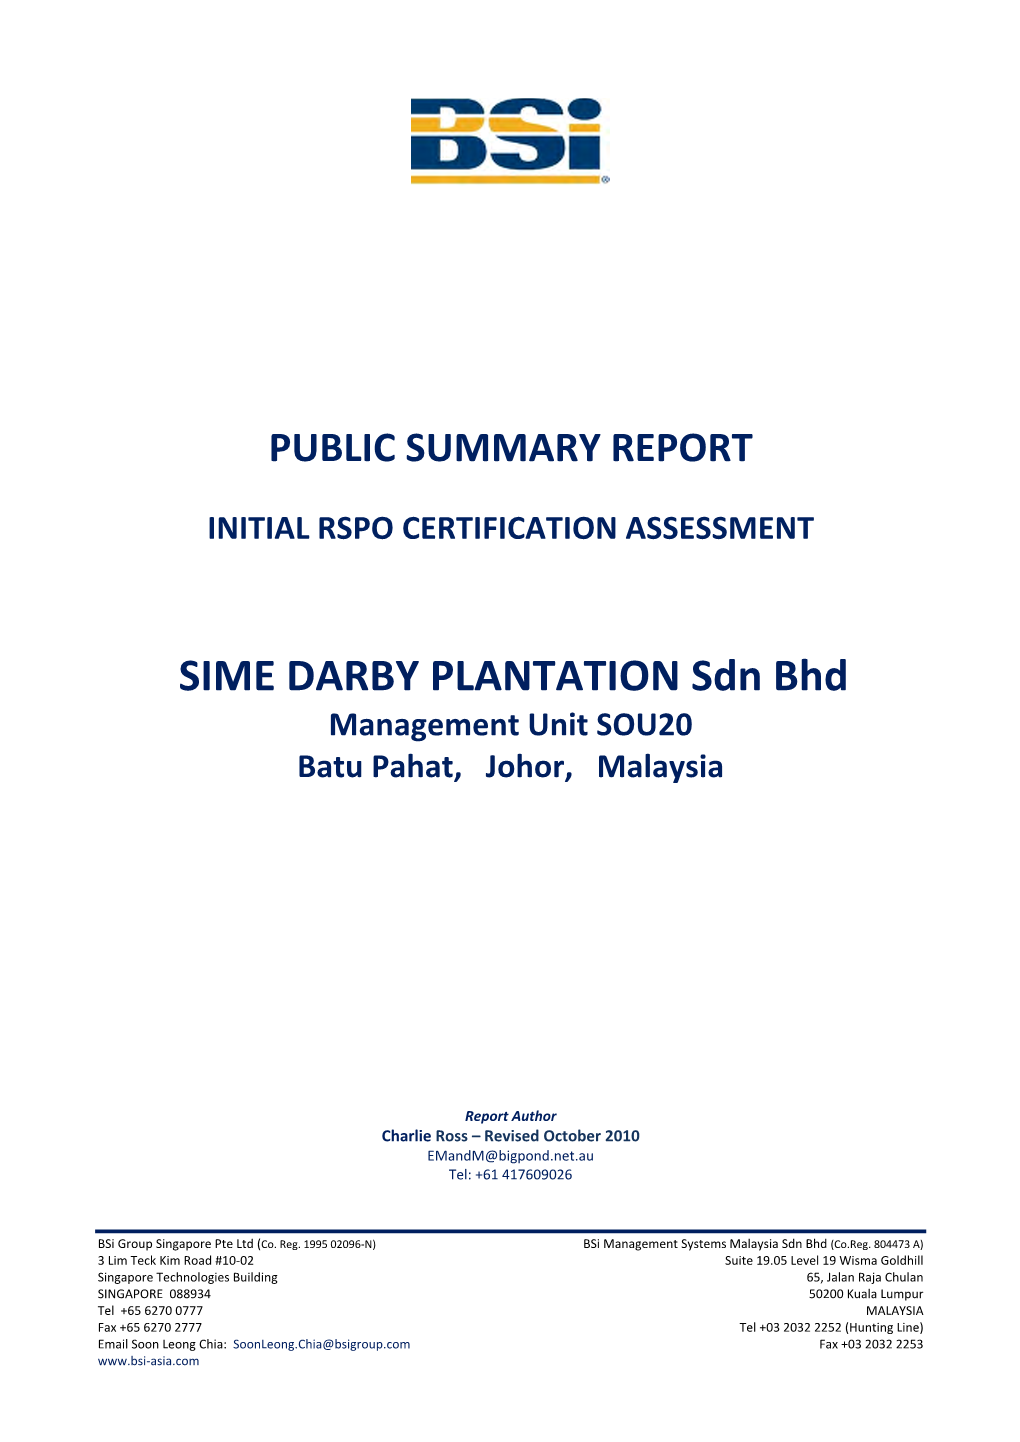 Sime Darby Plantation Sdn Bhd (SOU